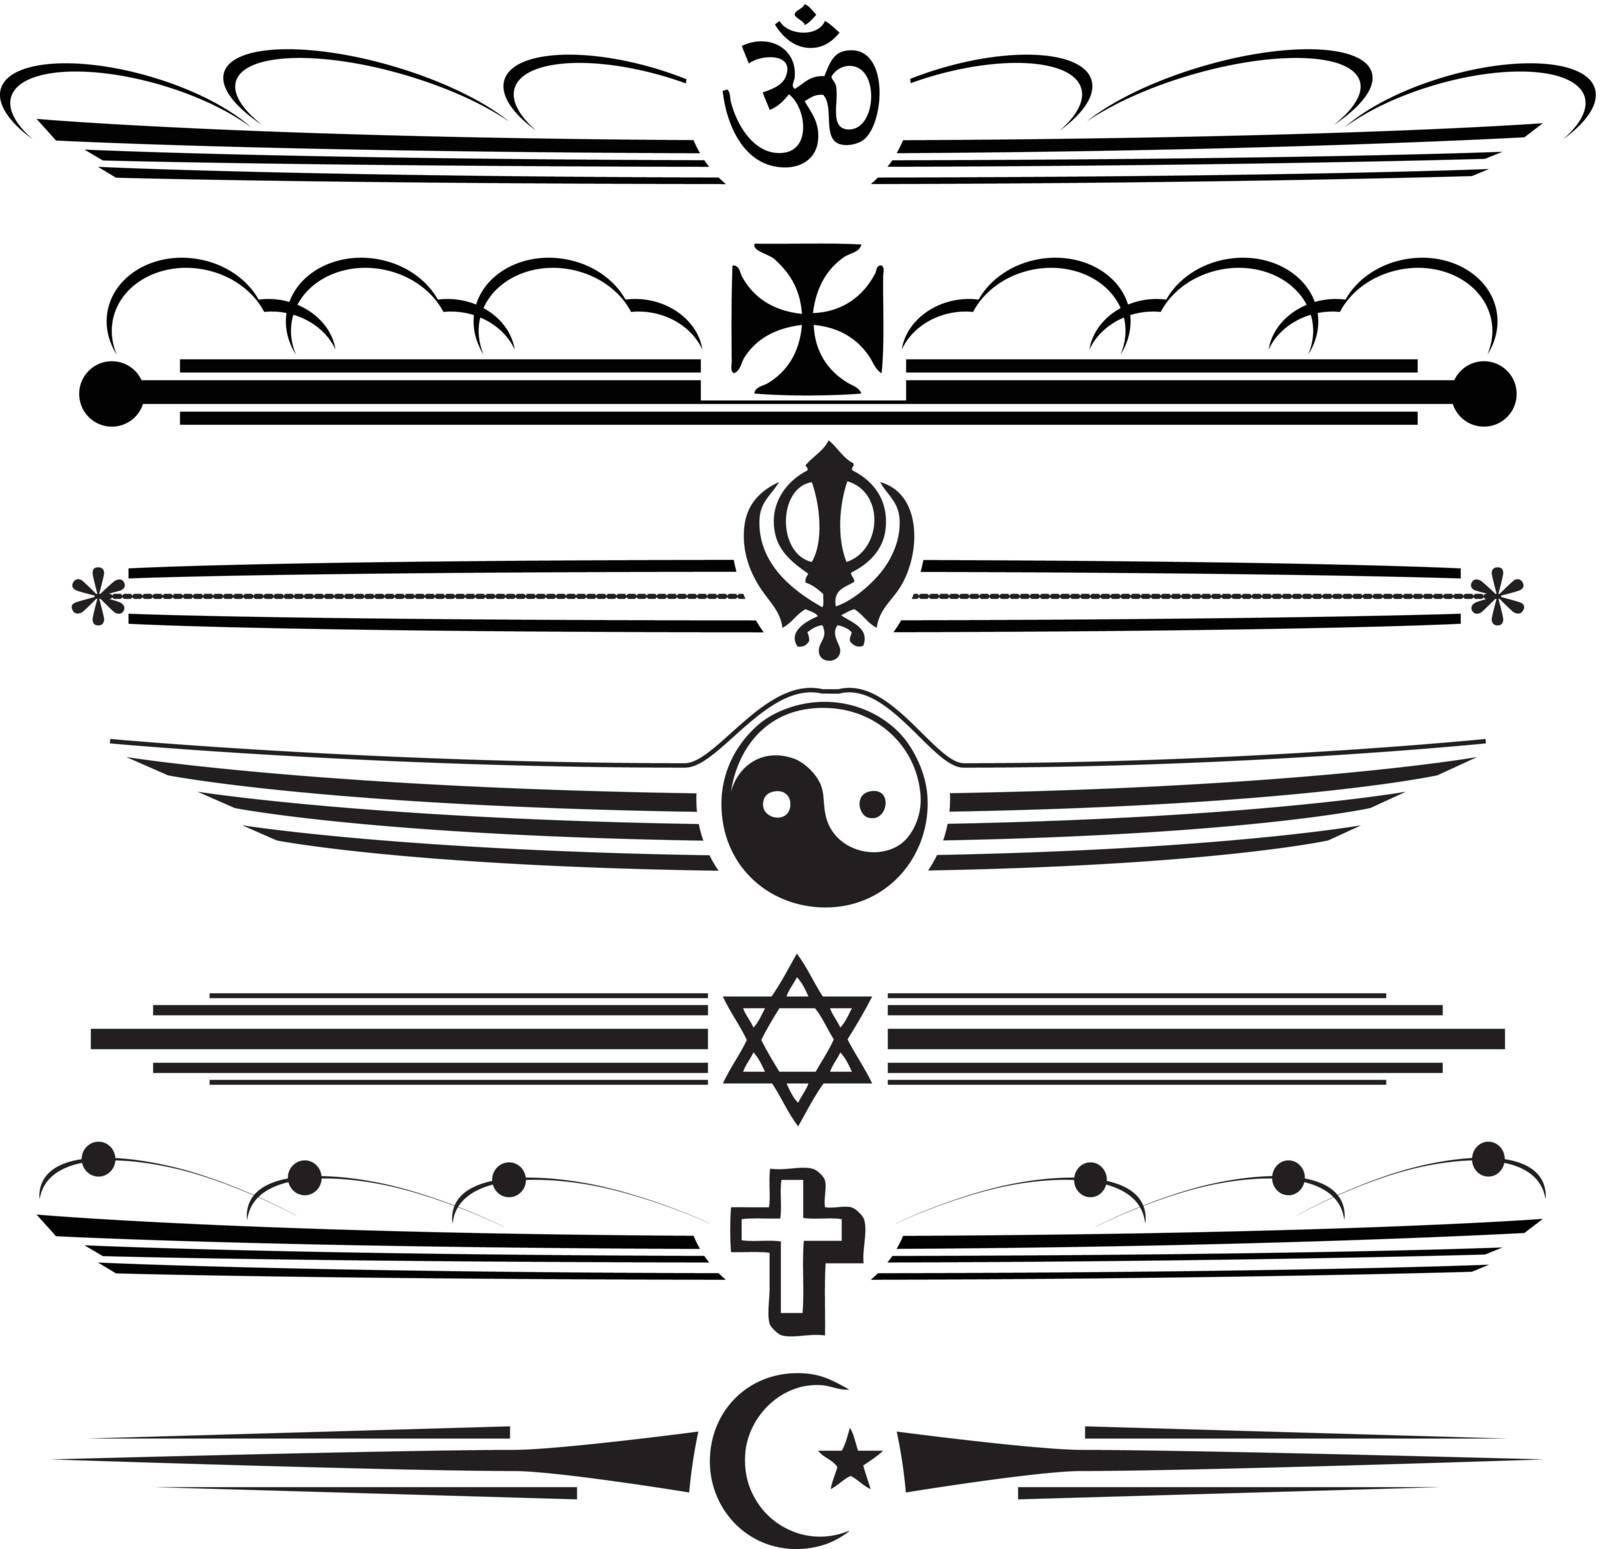 Symbols of different religions in a vintage design. Vector illustration.